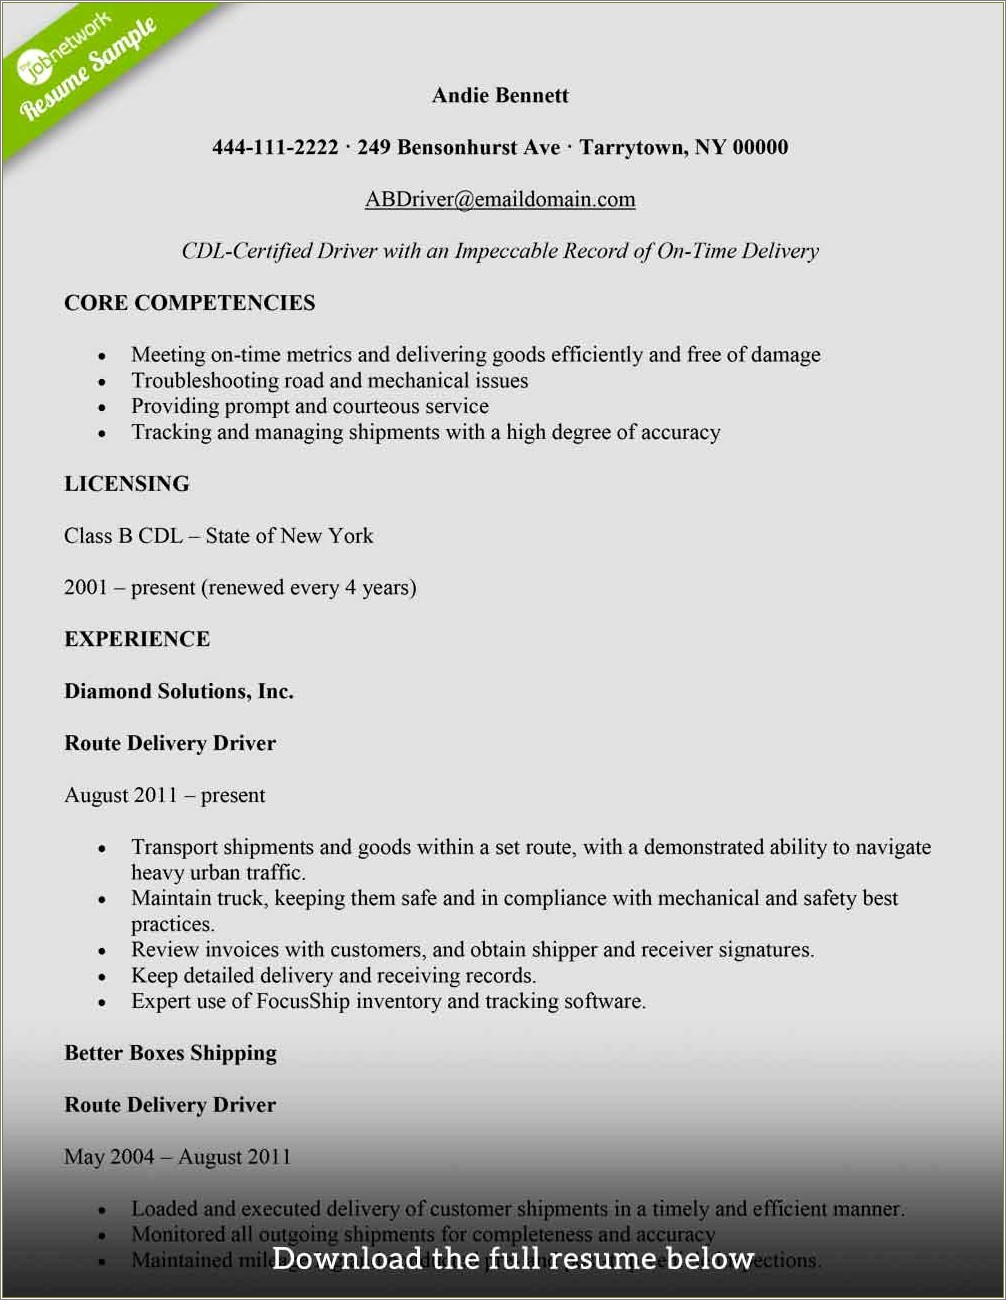 Personal Driver Job Description For Resume